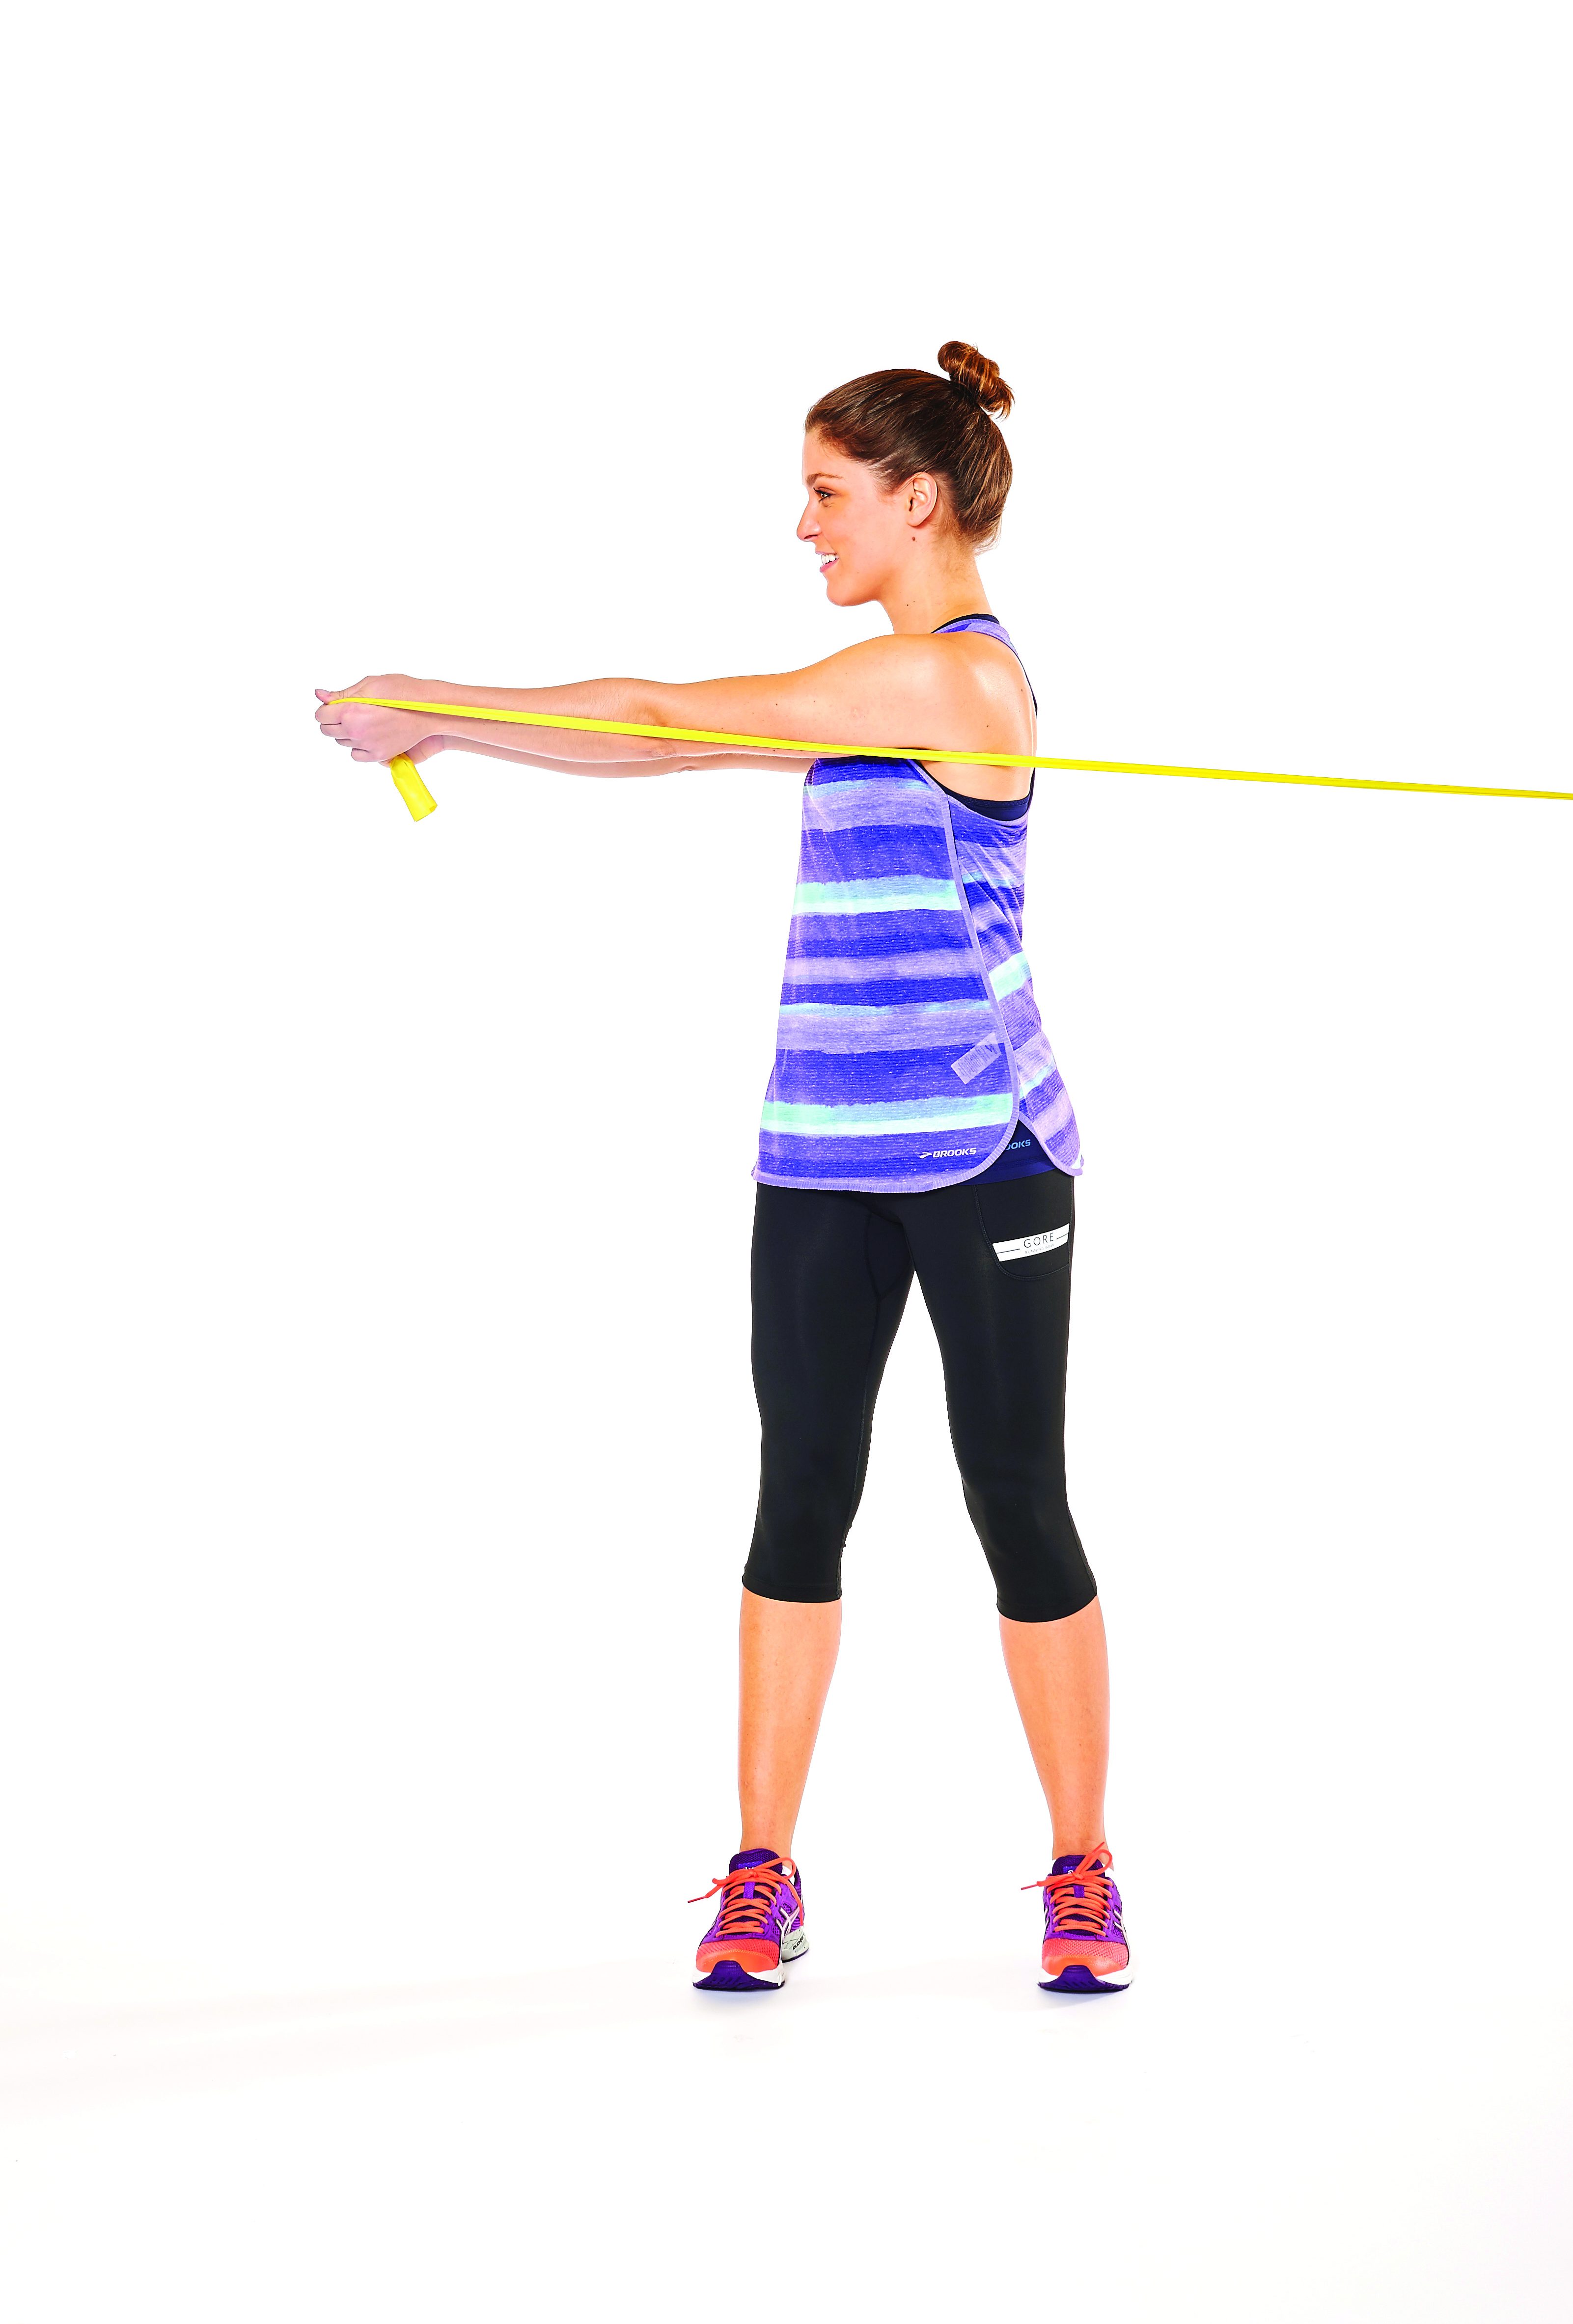 woman demonstrating straight arm rotation